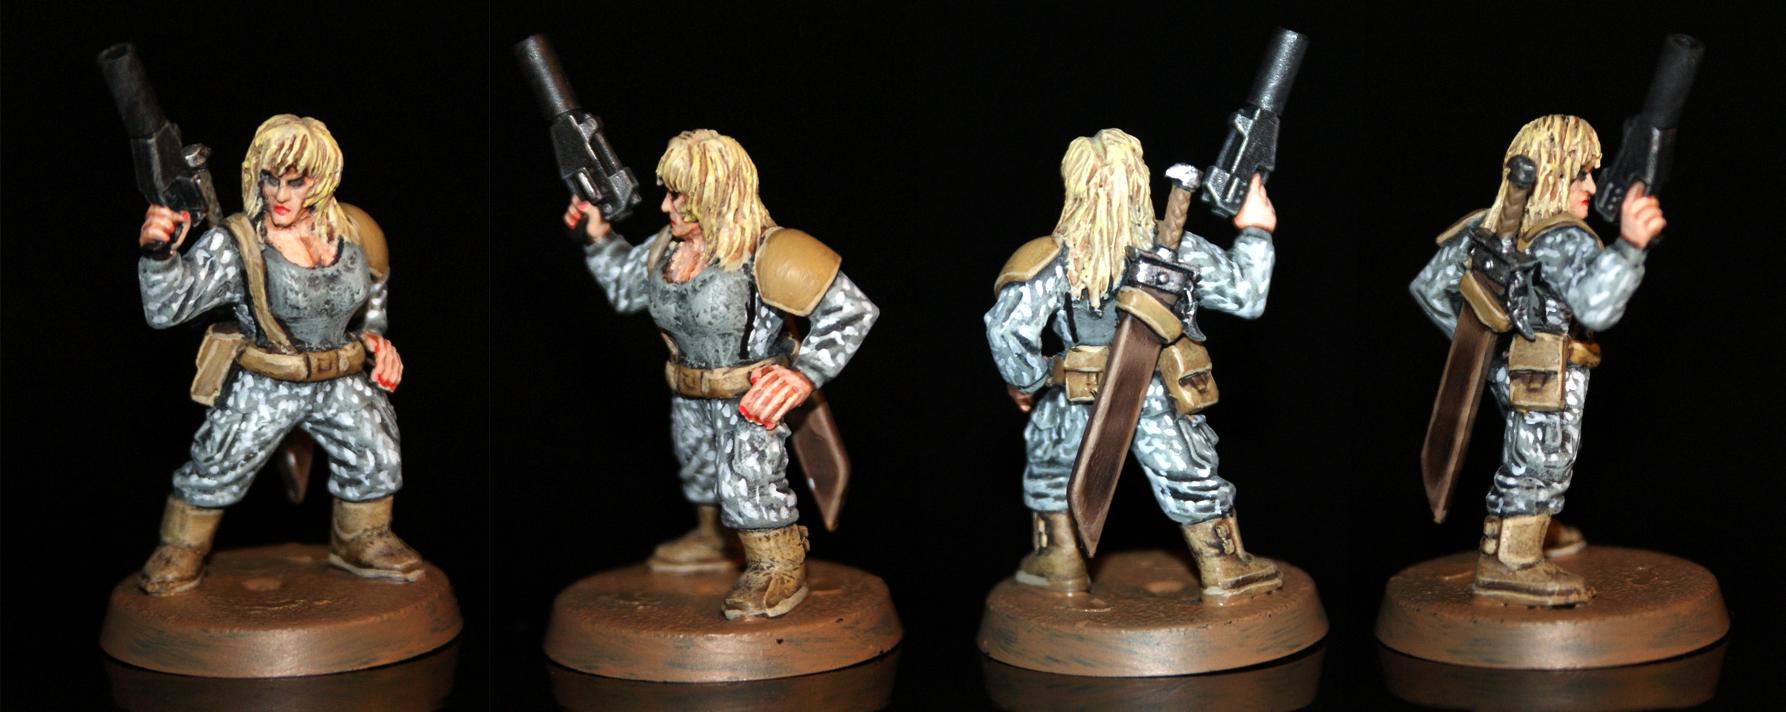 Astra Militarum, Female, Imperial Guard, Warhammer 40,000